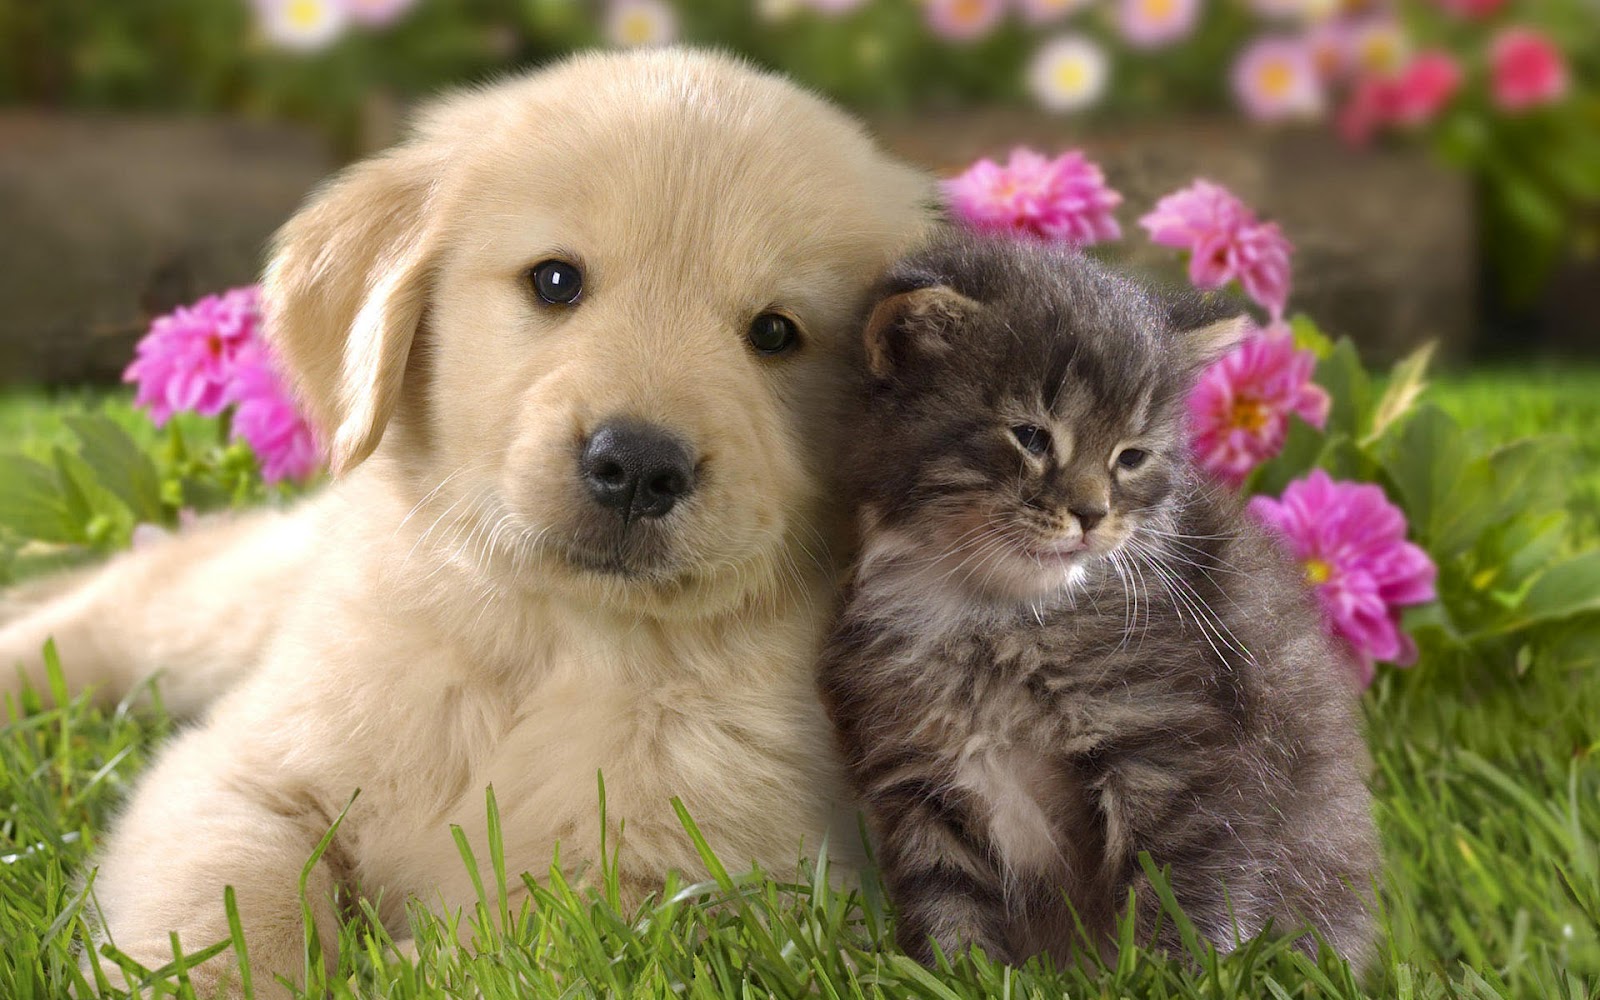 43+] Kittens and Puppies Wallpaper Desktop - WallpaperSafari